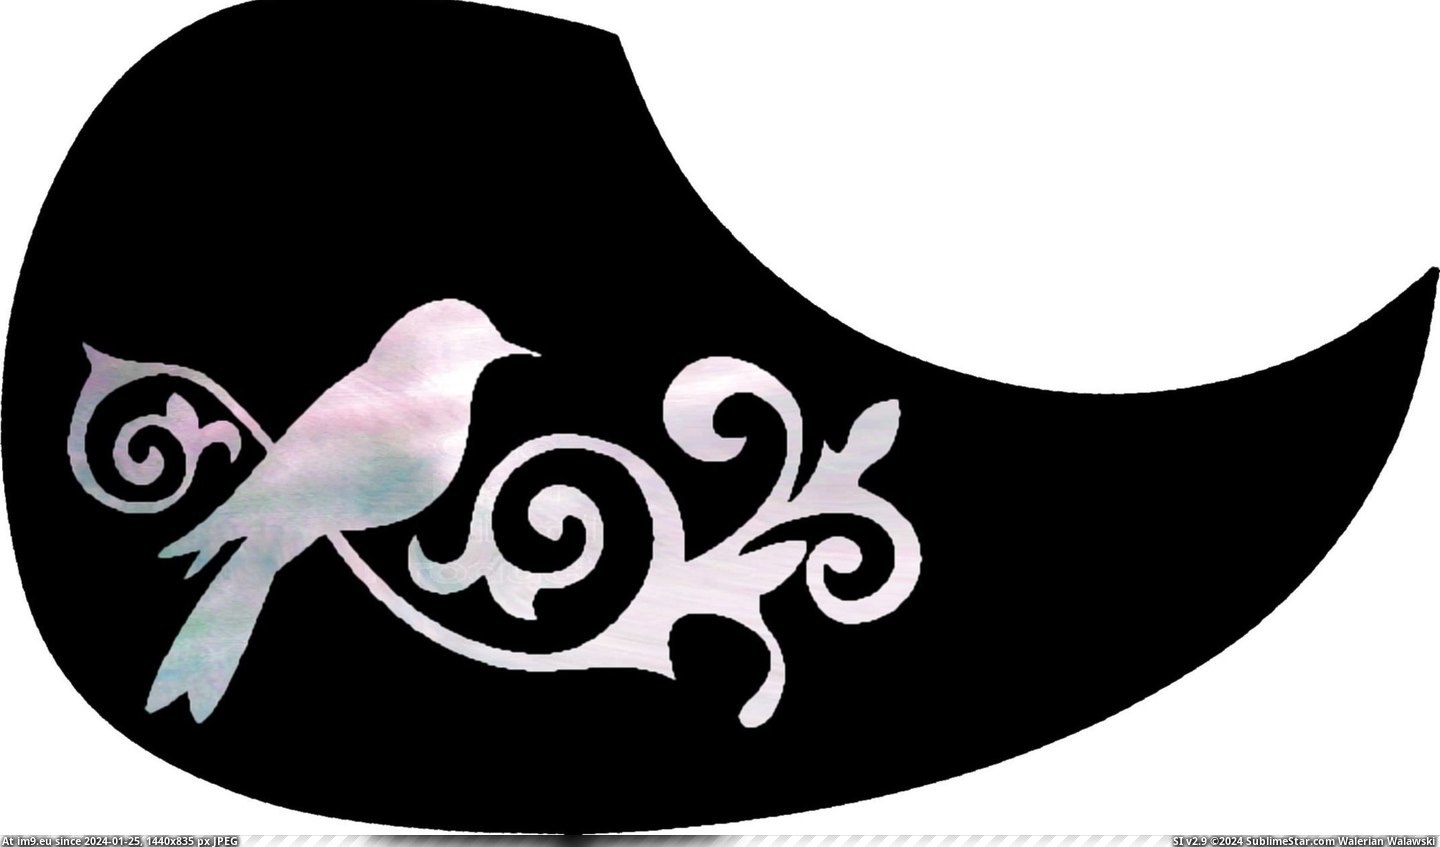 #Pick #Bird #Song #Guard #Pearl Pick Guard - Pearl Song Bird Pic. (Bild von album Custom Pickguard Art))